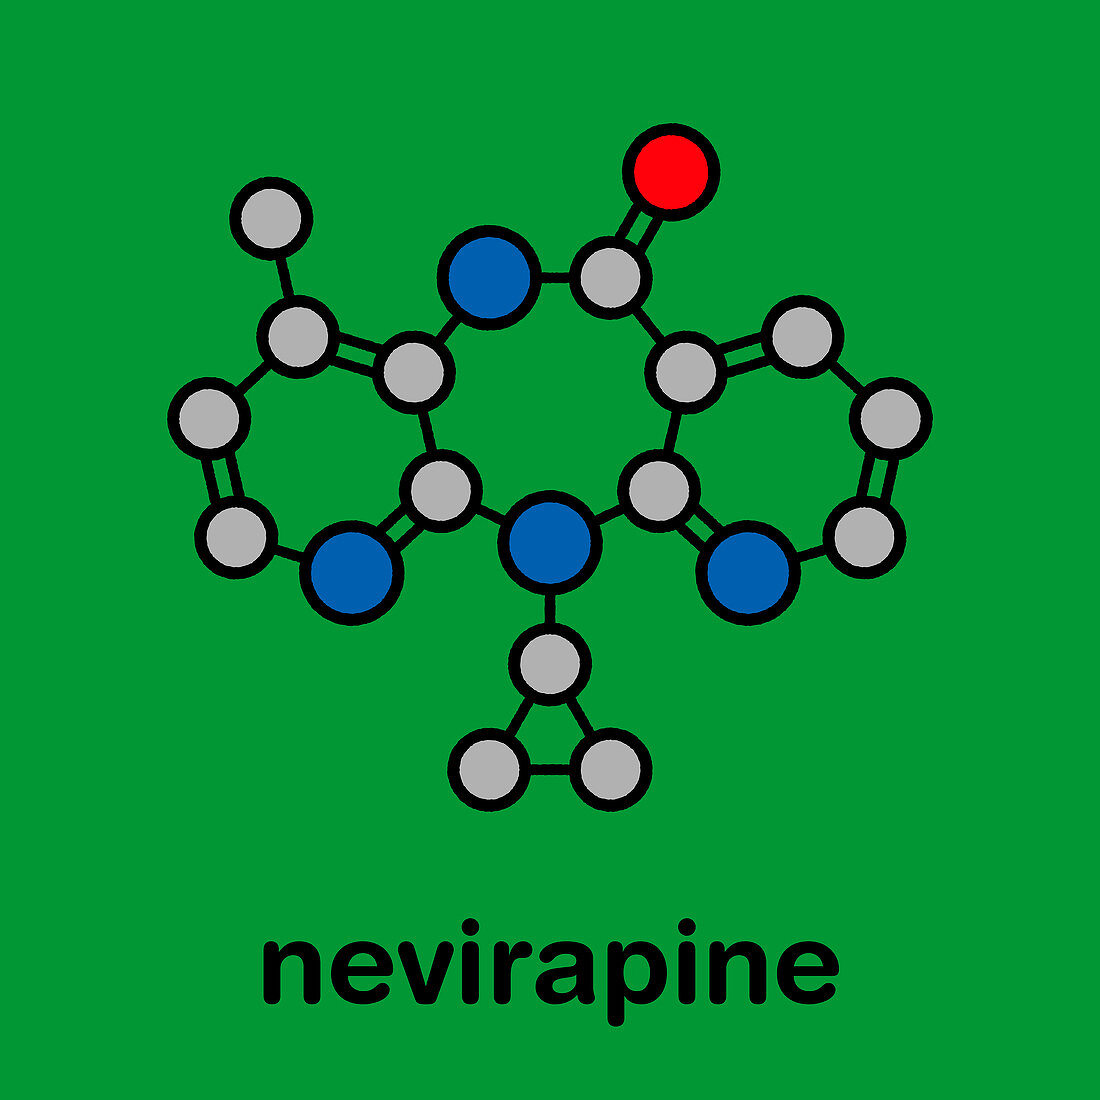 Nevirapine HIV drug, molecular model